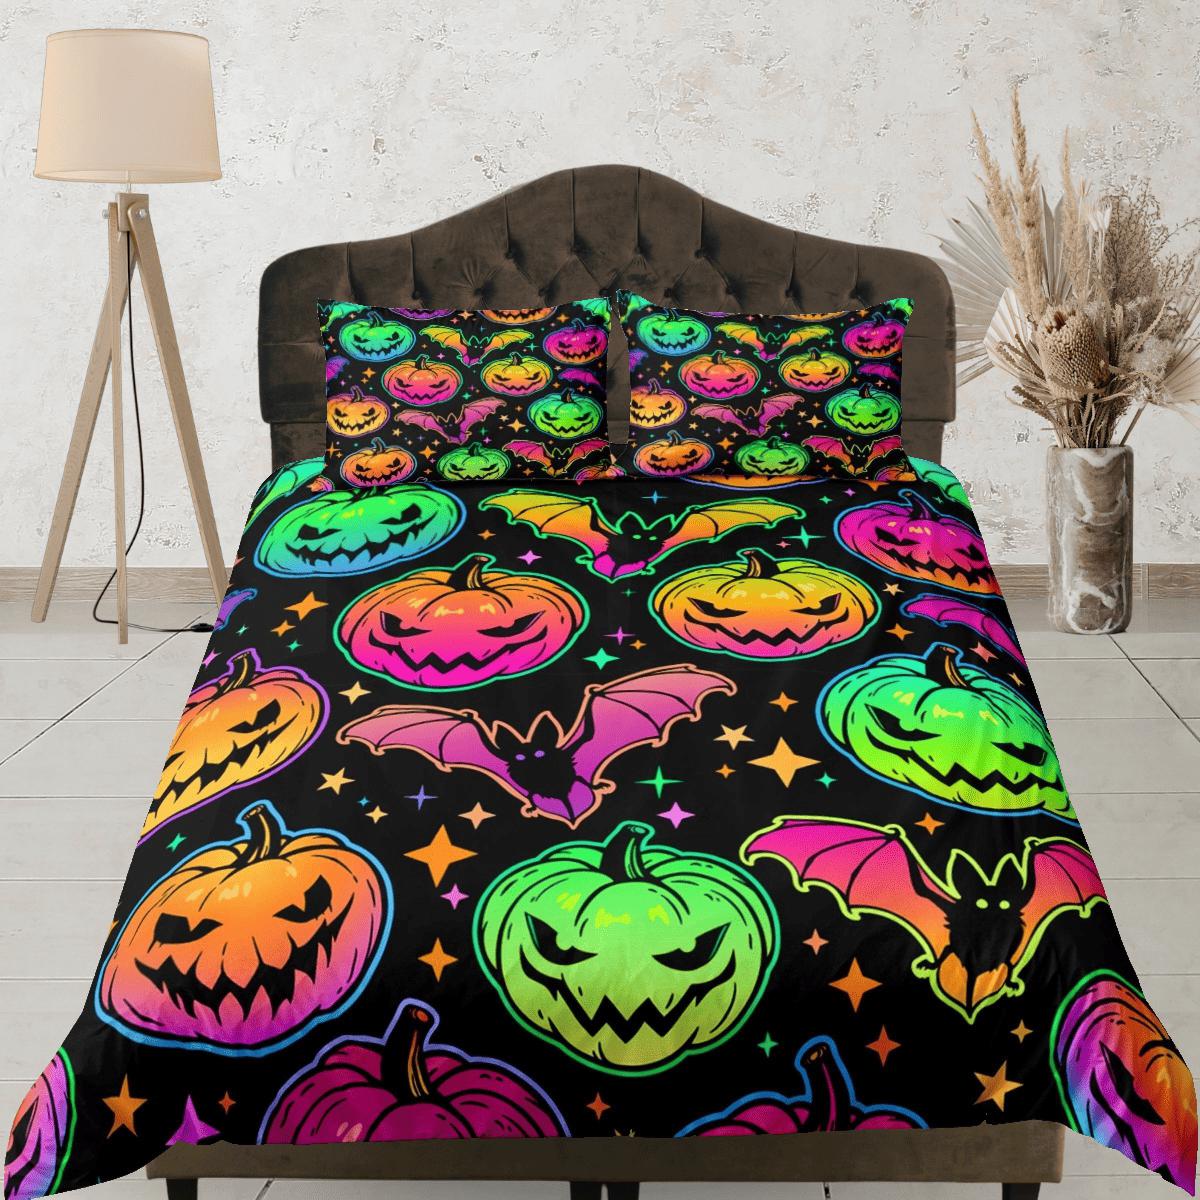 daintyduvet Bat and pumpkin 90s neon halloween bedding hippie retro duvet cover set, colorful dorm bedding, teens bedroom, adult duvet, toddler bedding